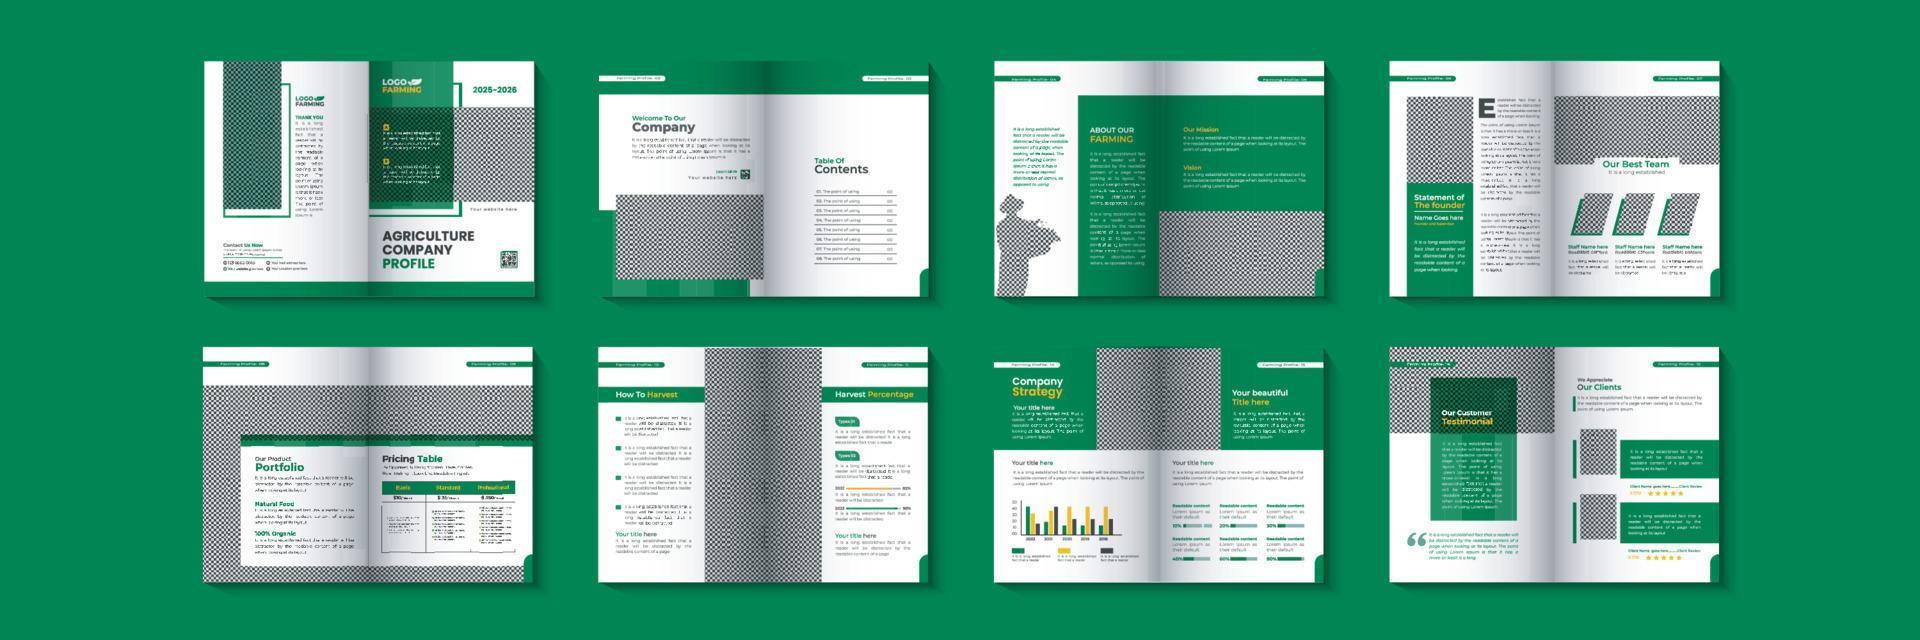 jordbruks jordbruk företag profil broschyr mall och organisk jordbruk företag profil broschyr design, jordbruks företag företag profil broschyr design vektor